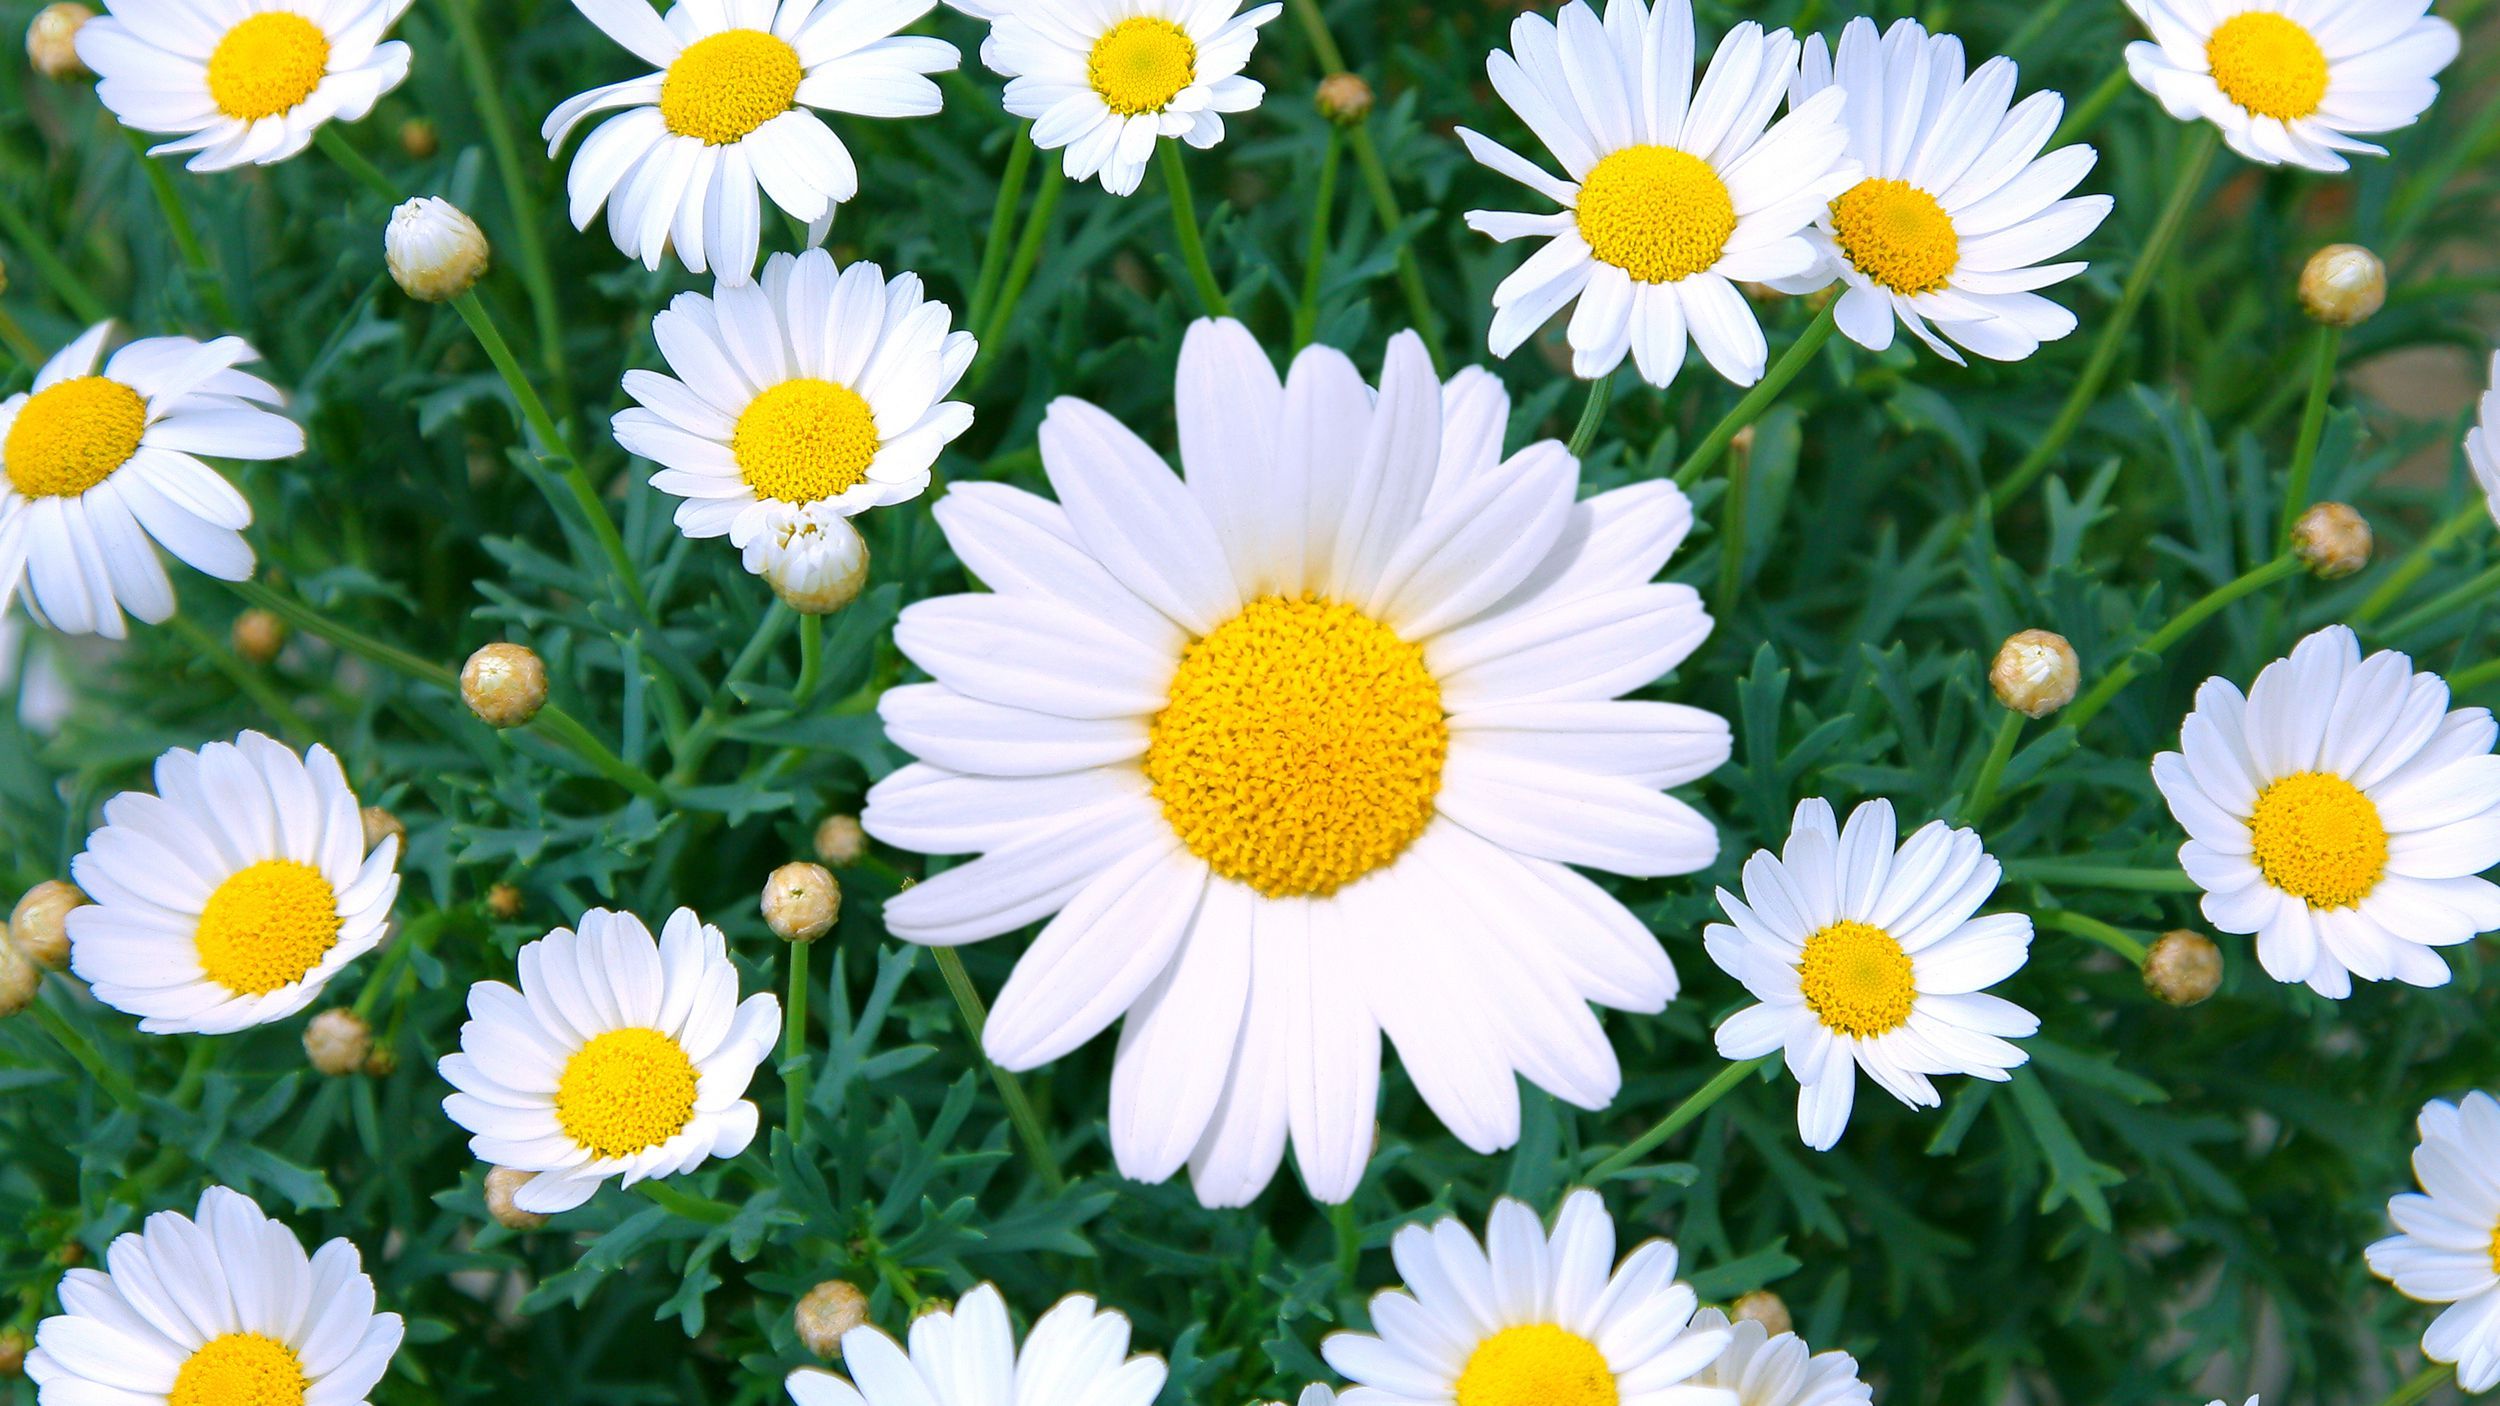 Daisy Care - How to Plant & Grow Outdoor Daisy Flowers in a Garden